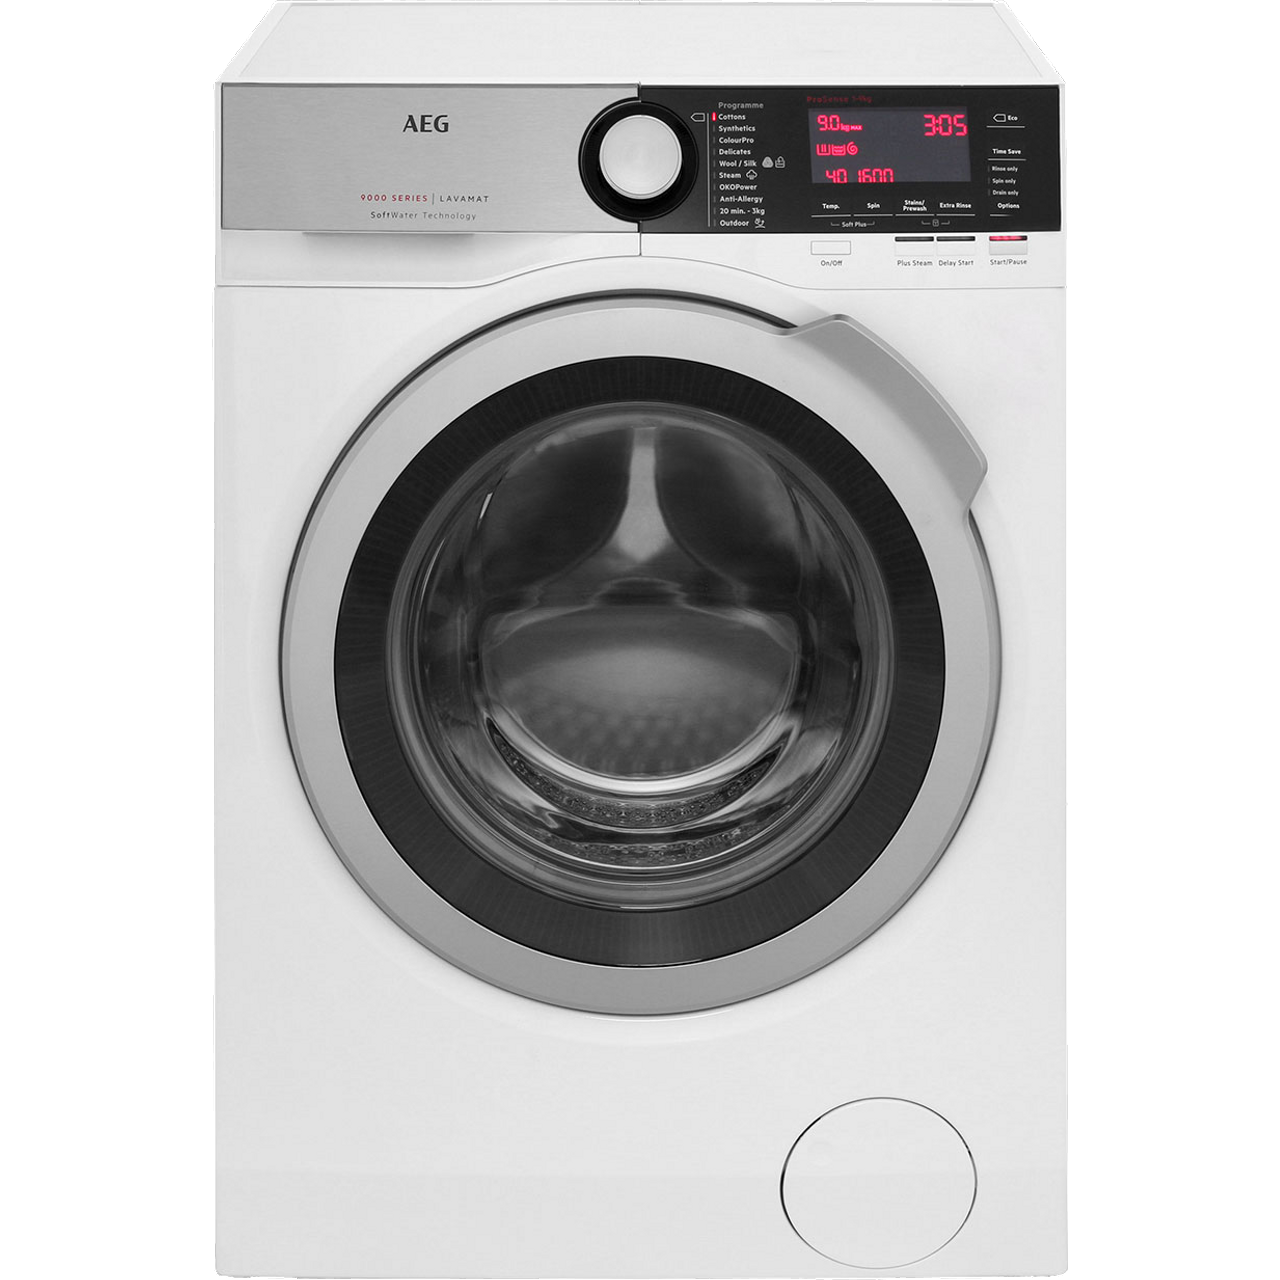 10+ Aeg Lavamat Washing Machine Pics